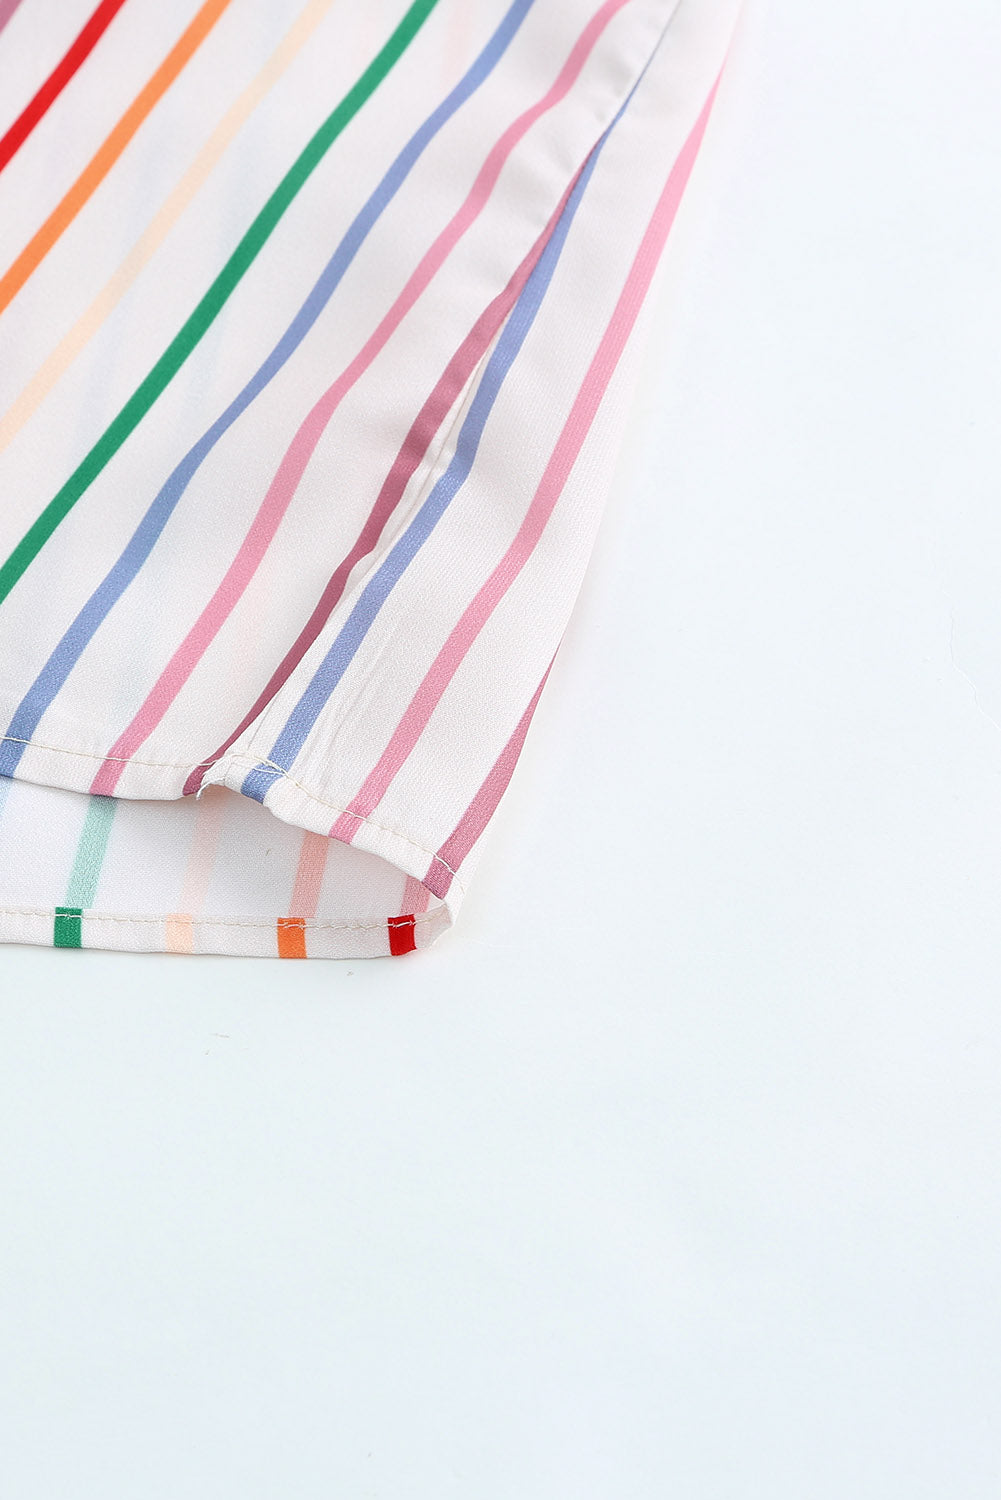 TEEK - Rainbow Striped Cap Sleeve Blouse TOPS TEEK Trend   